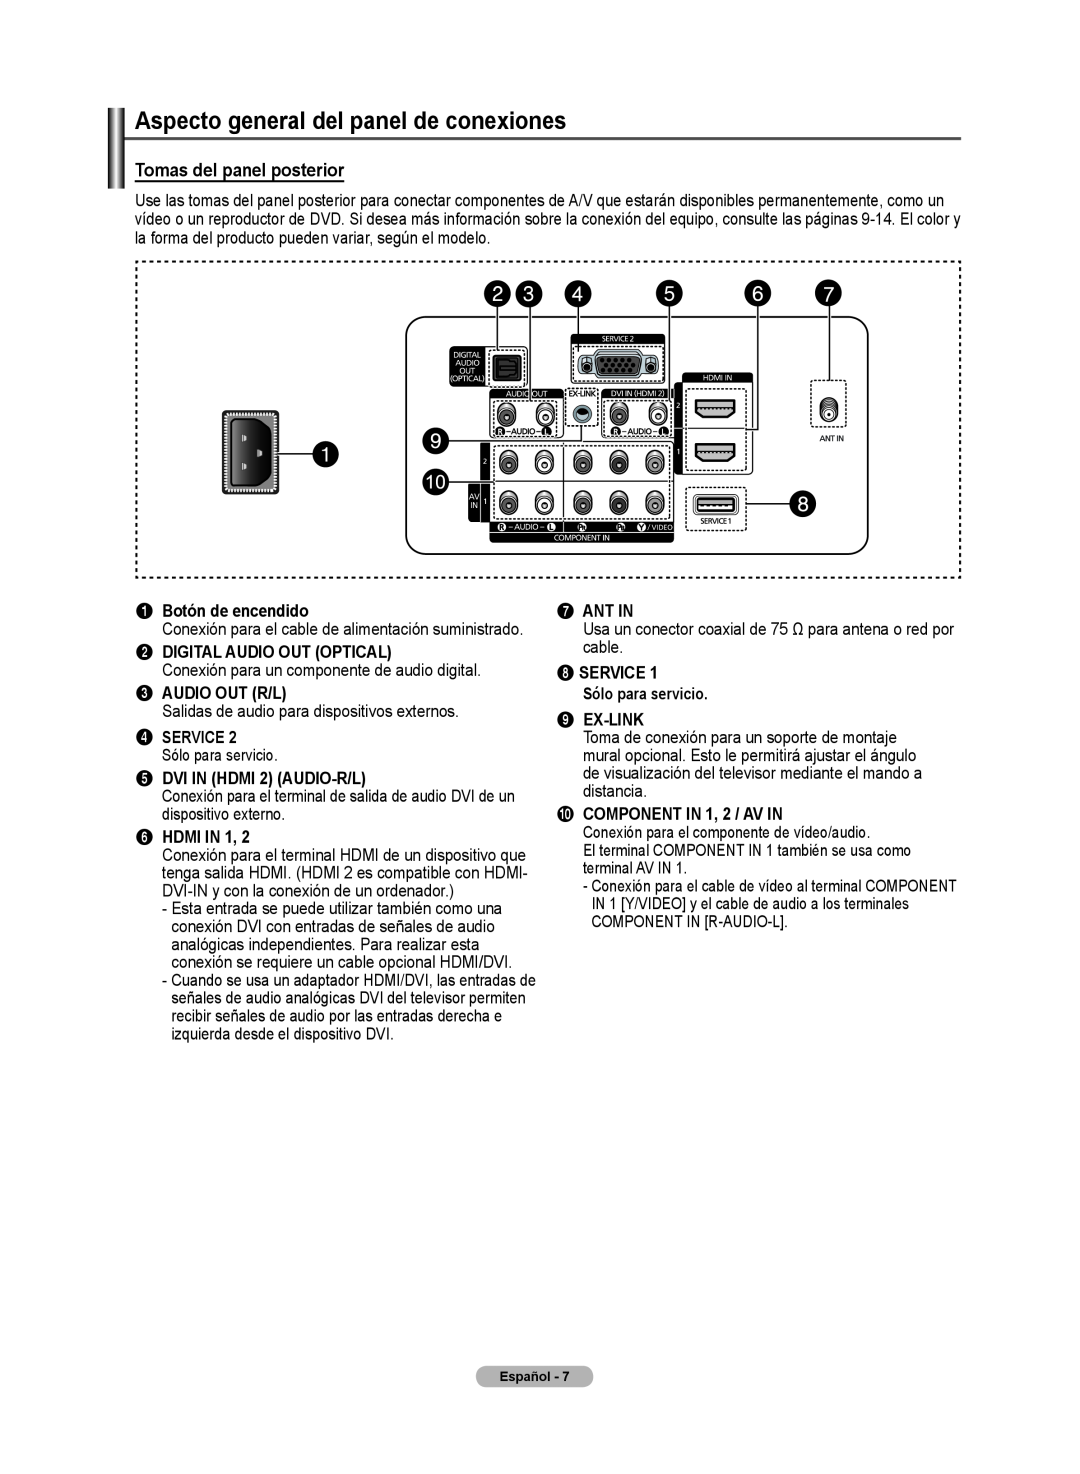 Samsung 510 Tomas del panel posterior, 1 Botón de encendido, Ant In, Digital Audio Out Optical, Service, Audio Out R/L 